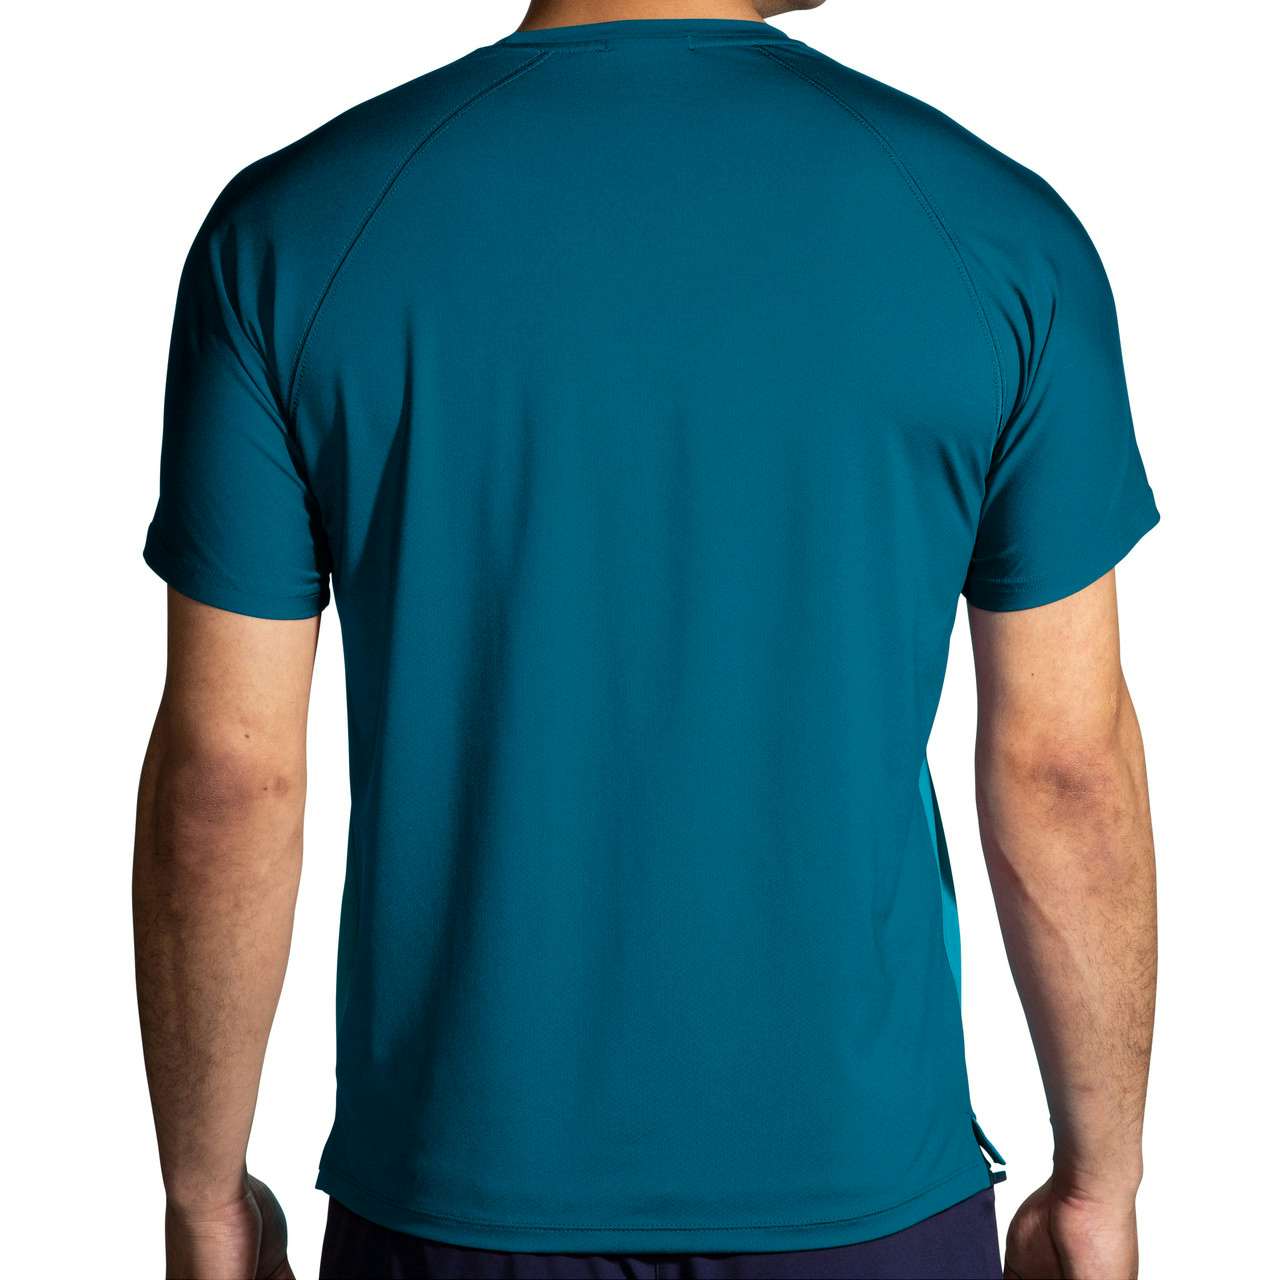 Atmosphere Short Sleeve Shirt Hyper Blue/Pacific